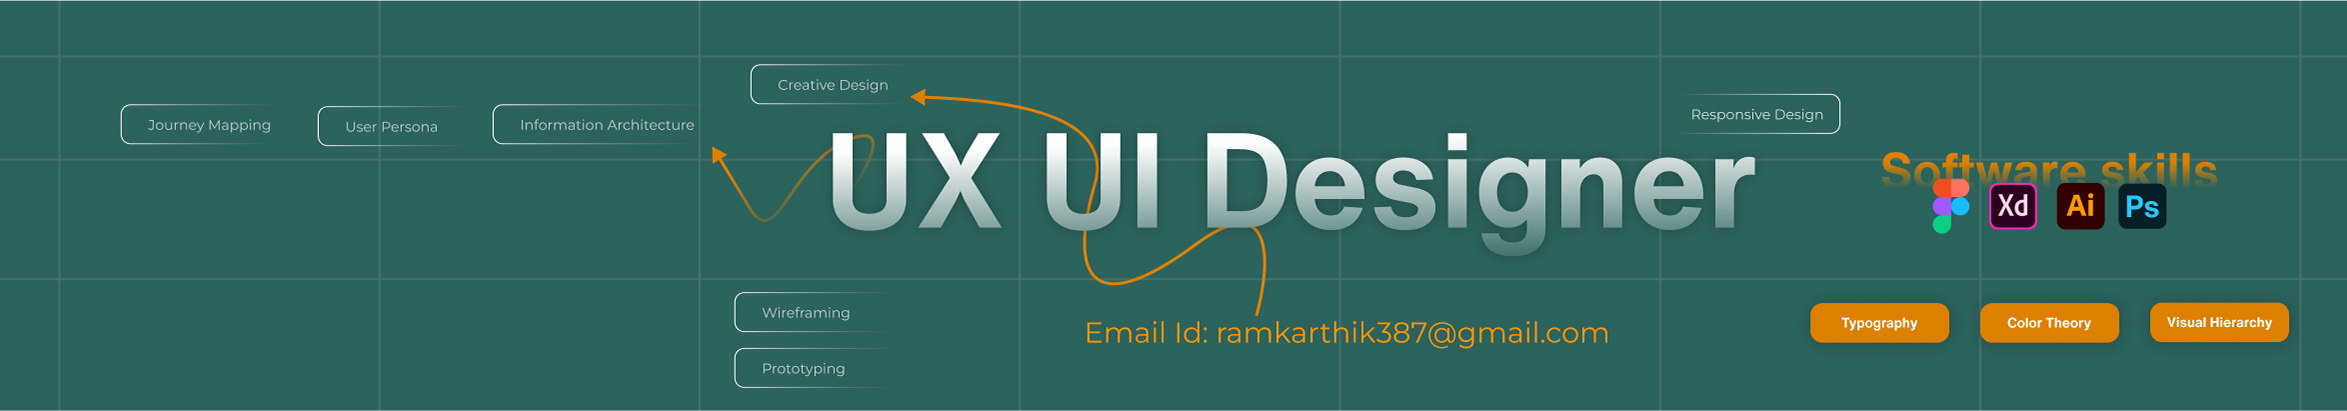 Profielbanner van Karthik Ram UX/UI Designer